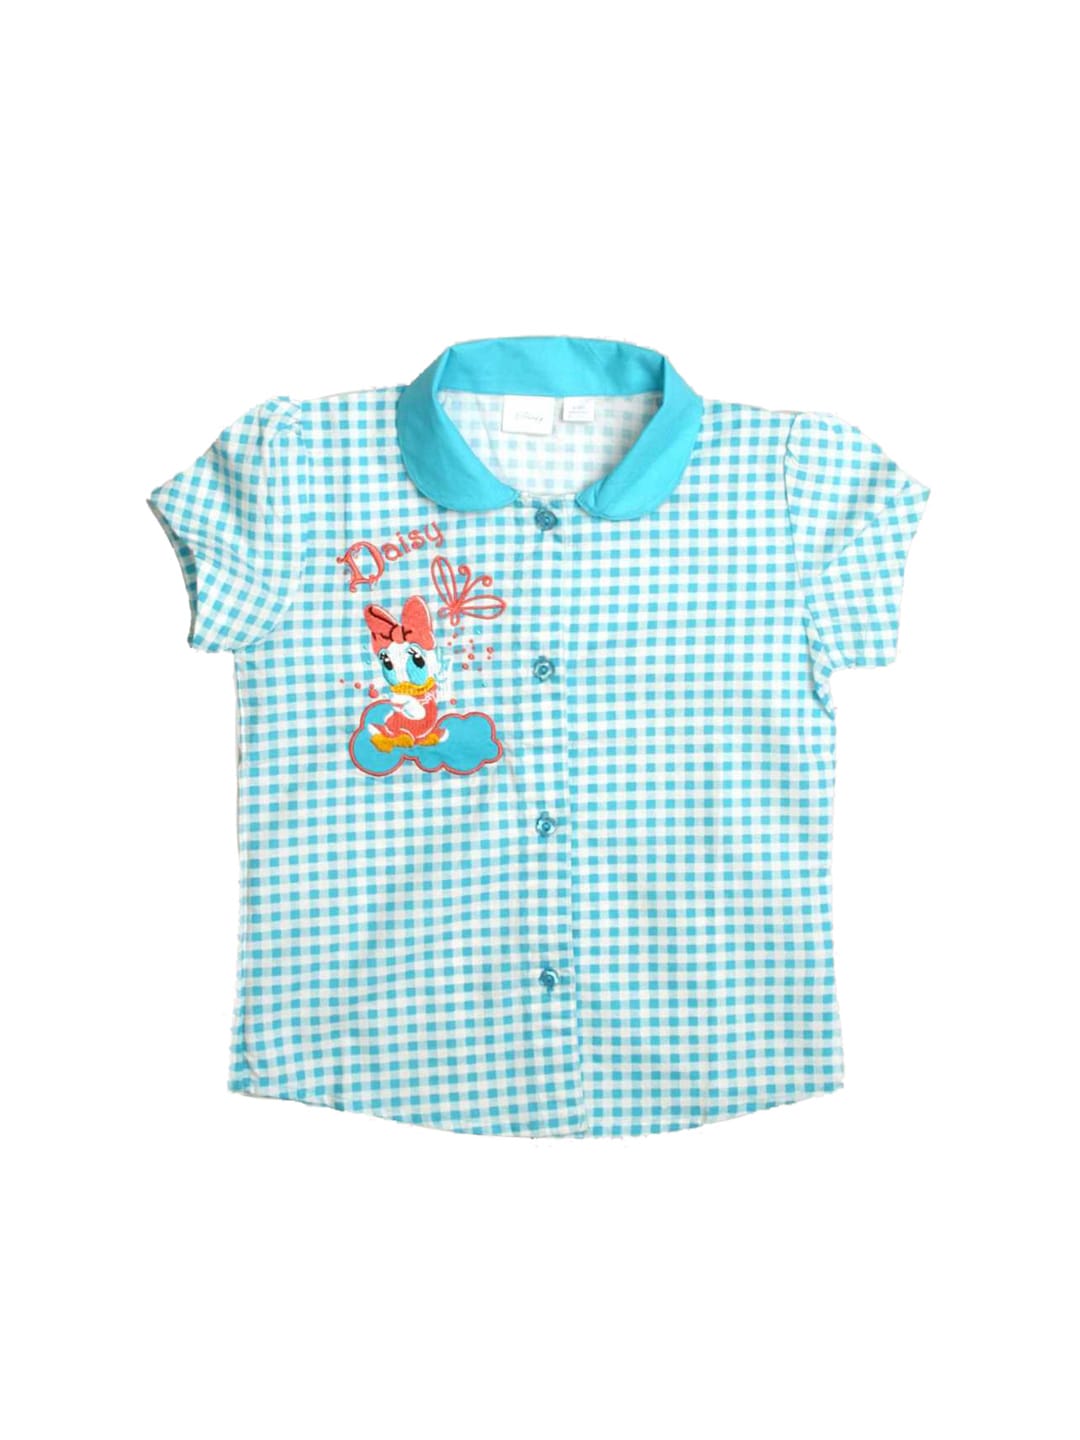 Disney Kids Girl's Blue Check Kidswear Shirt